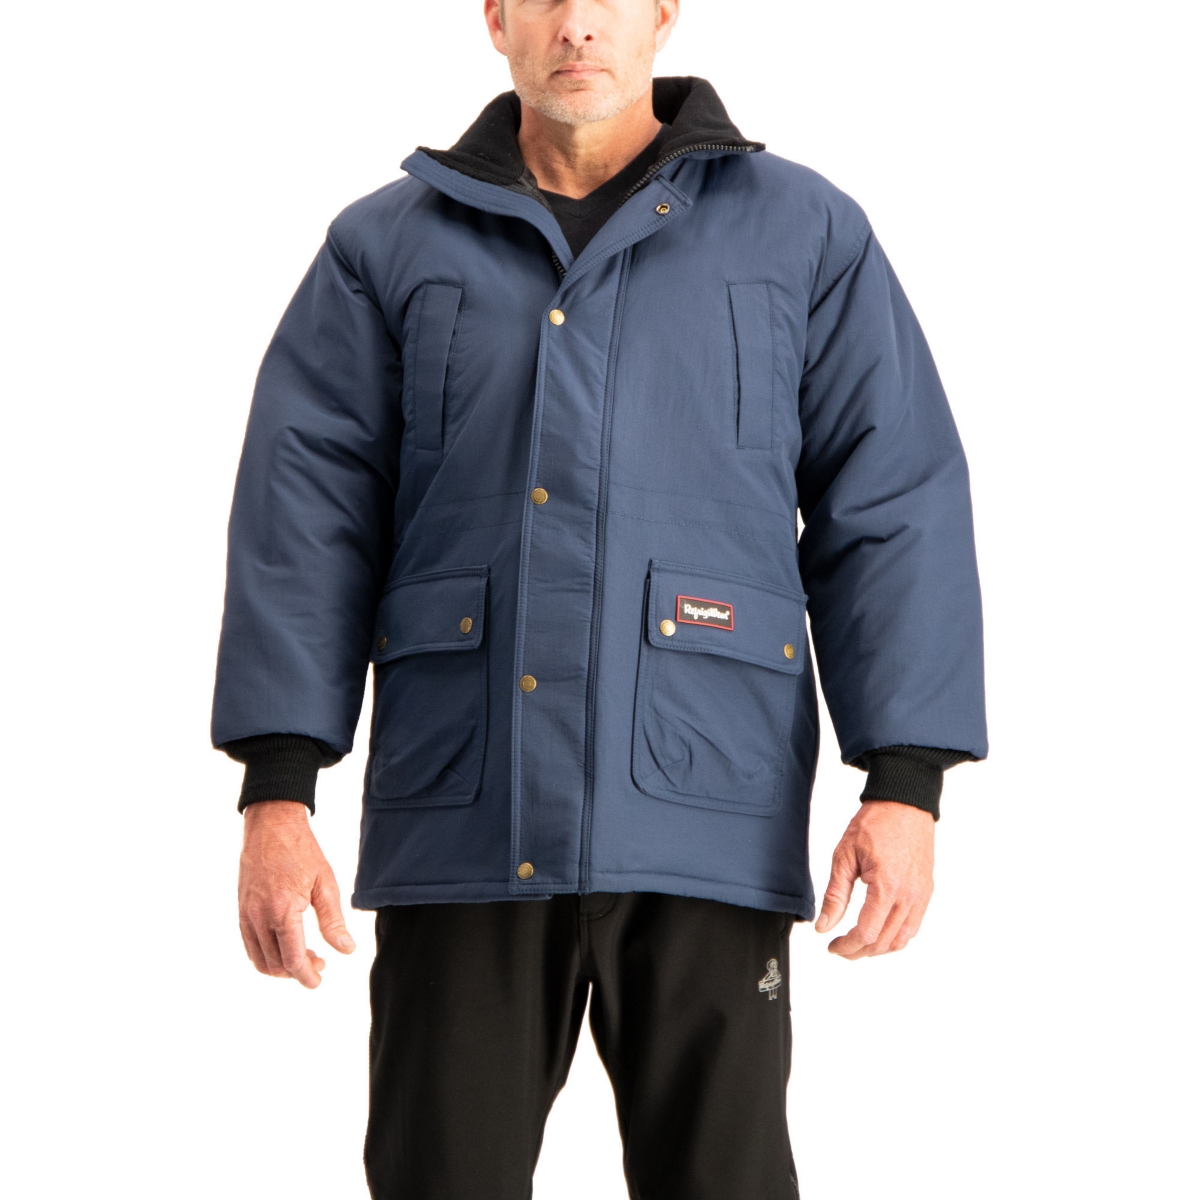 Men's Chill Breaker Lightweight Insulated Parka Jacket Workwear Coat - Navy